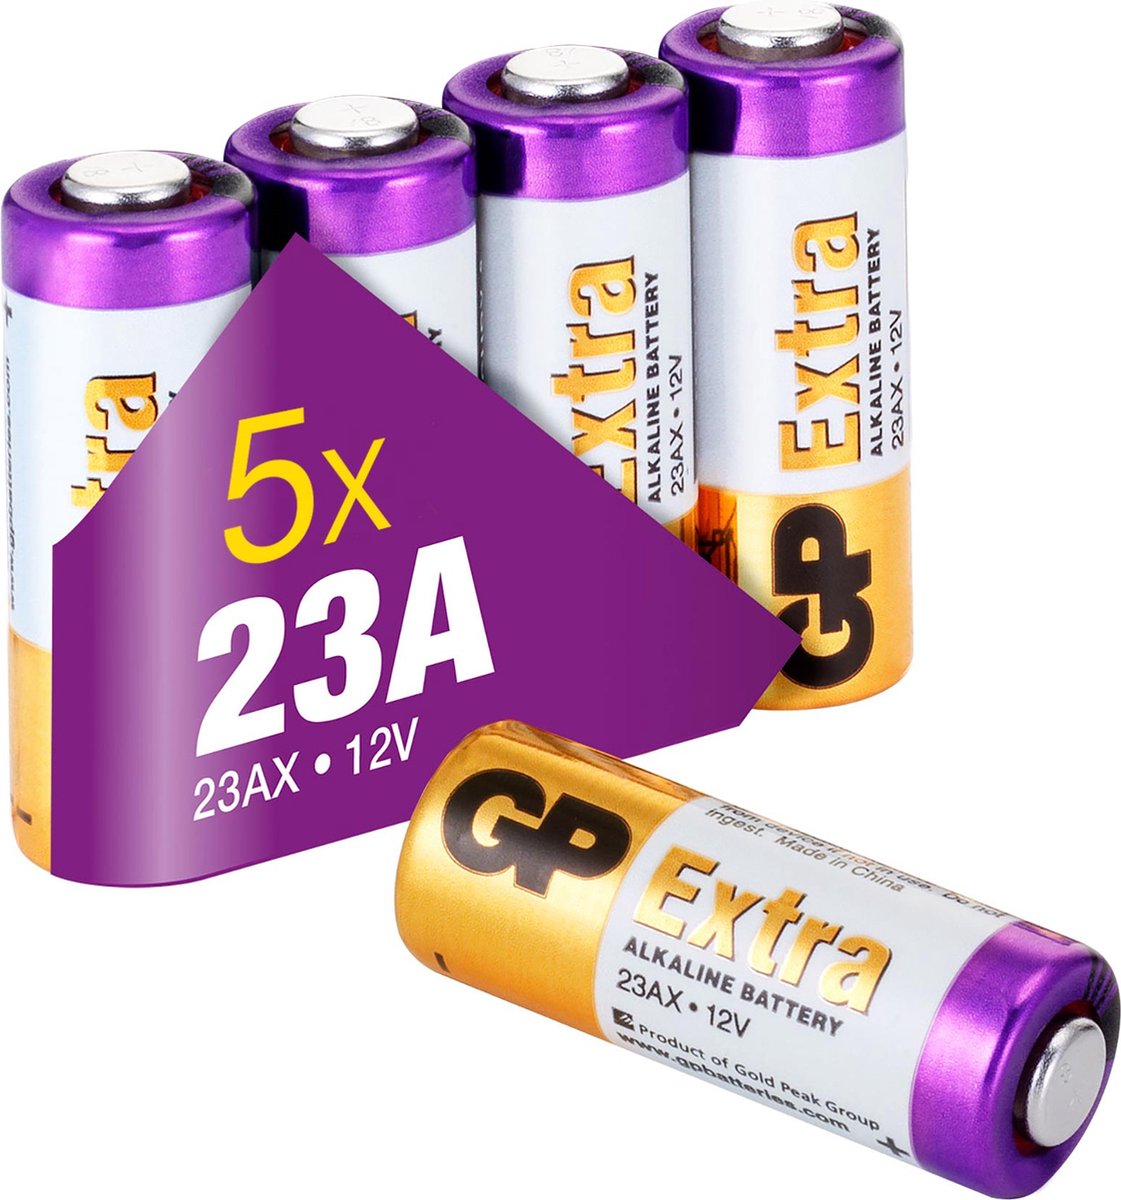 GP Extra Alkaline batterijen 23A batterij 12V A23 MN21 - 5 stuks -  Beschermd tegen lekken | bol.com